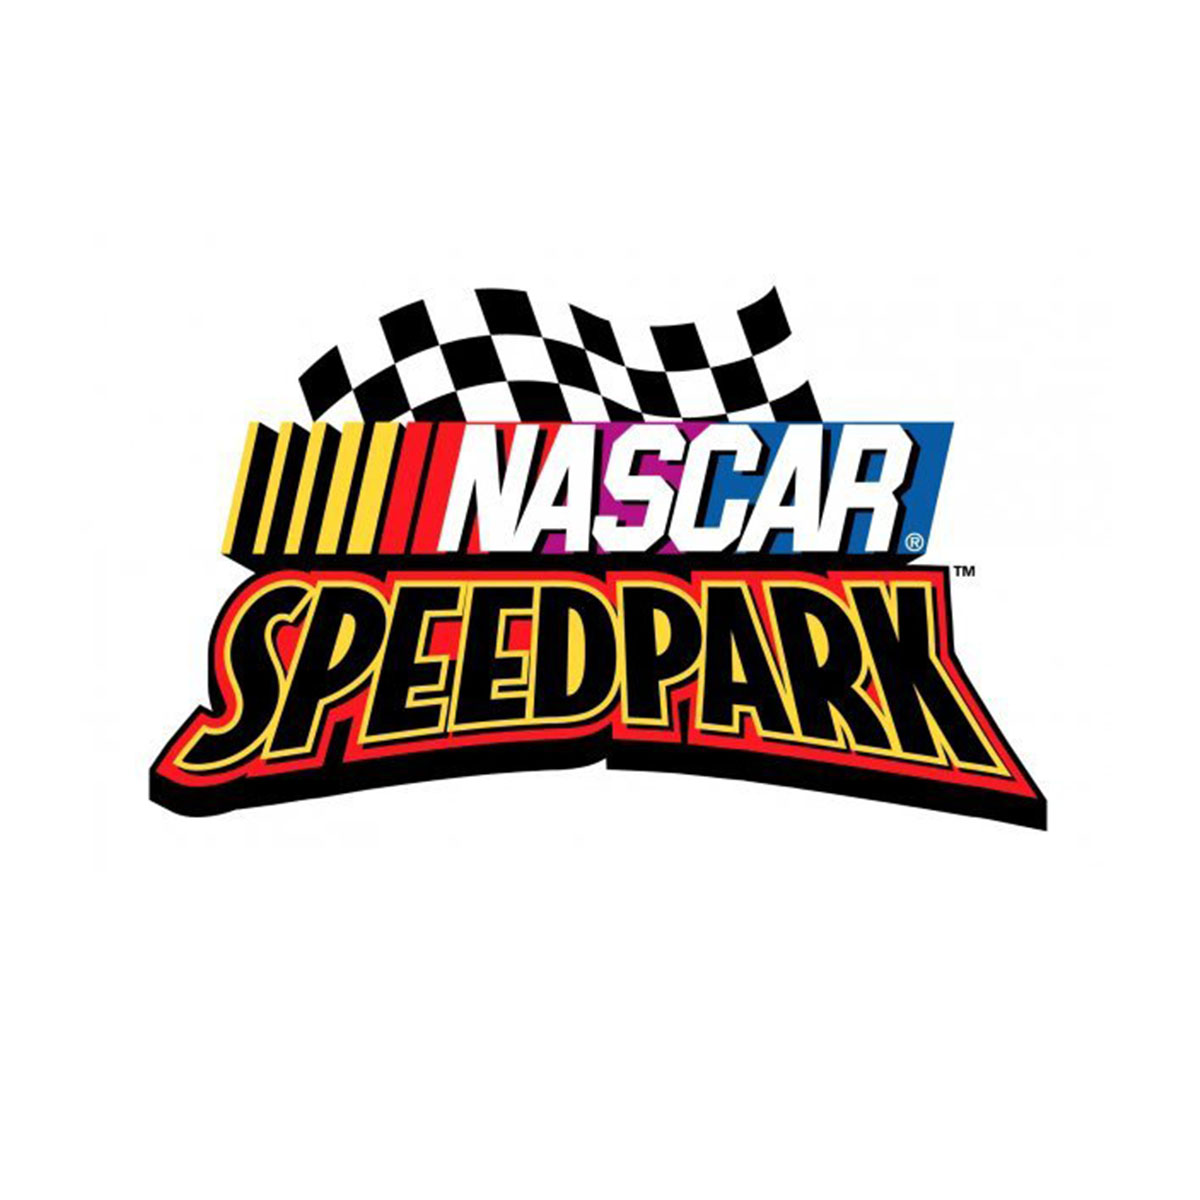 NASCAR Speedpark Logo Thumbnail.jpg